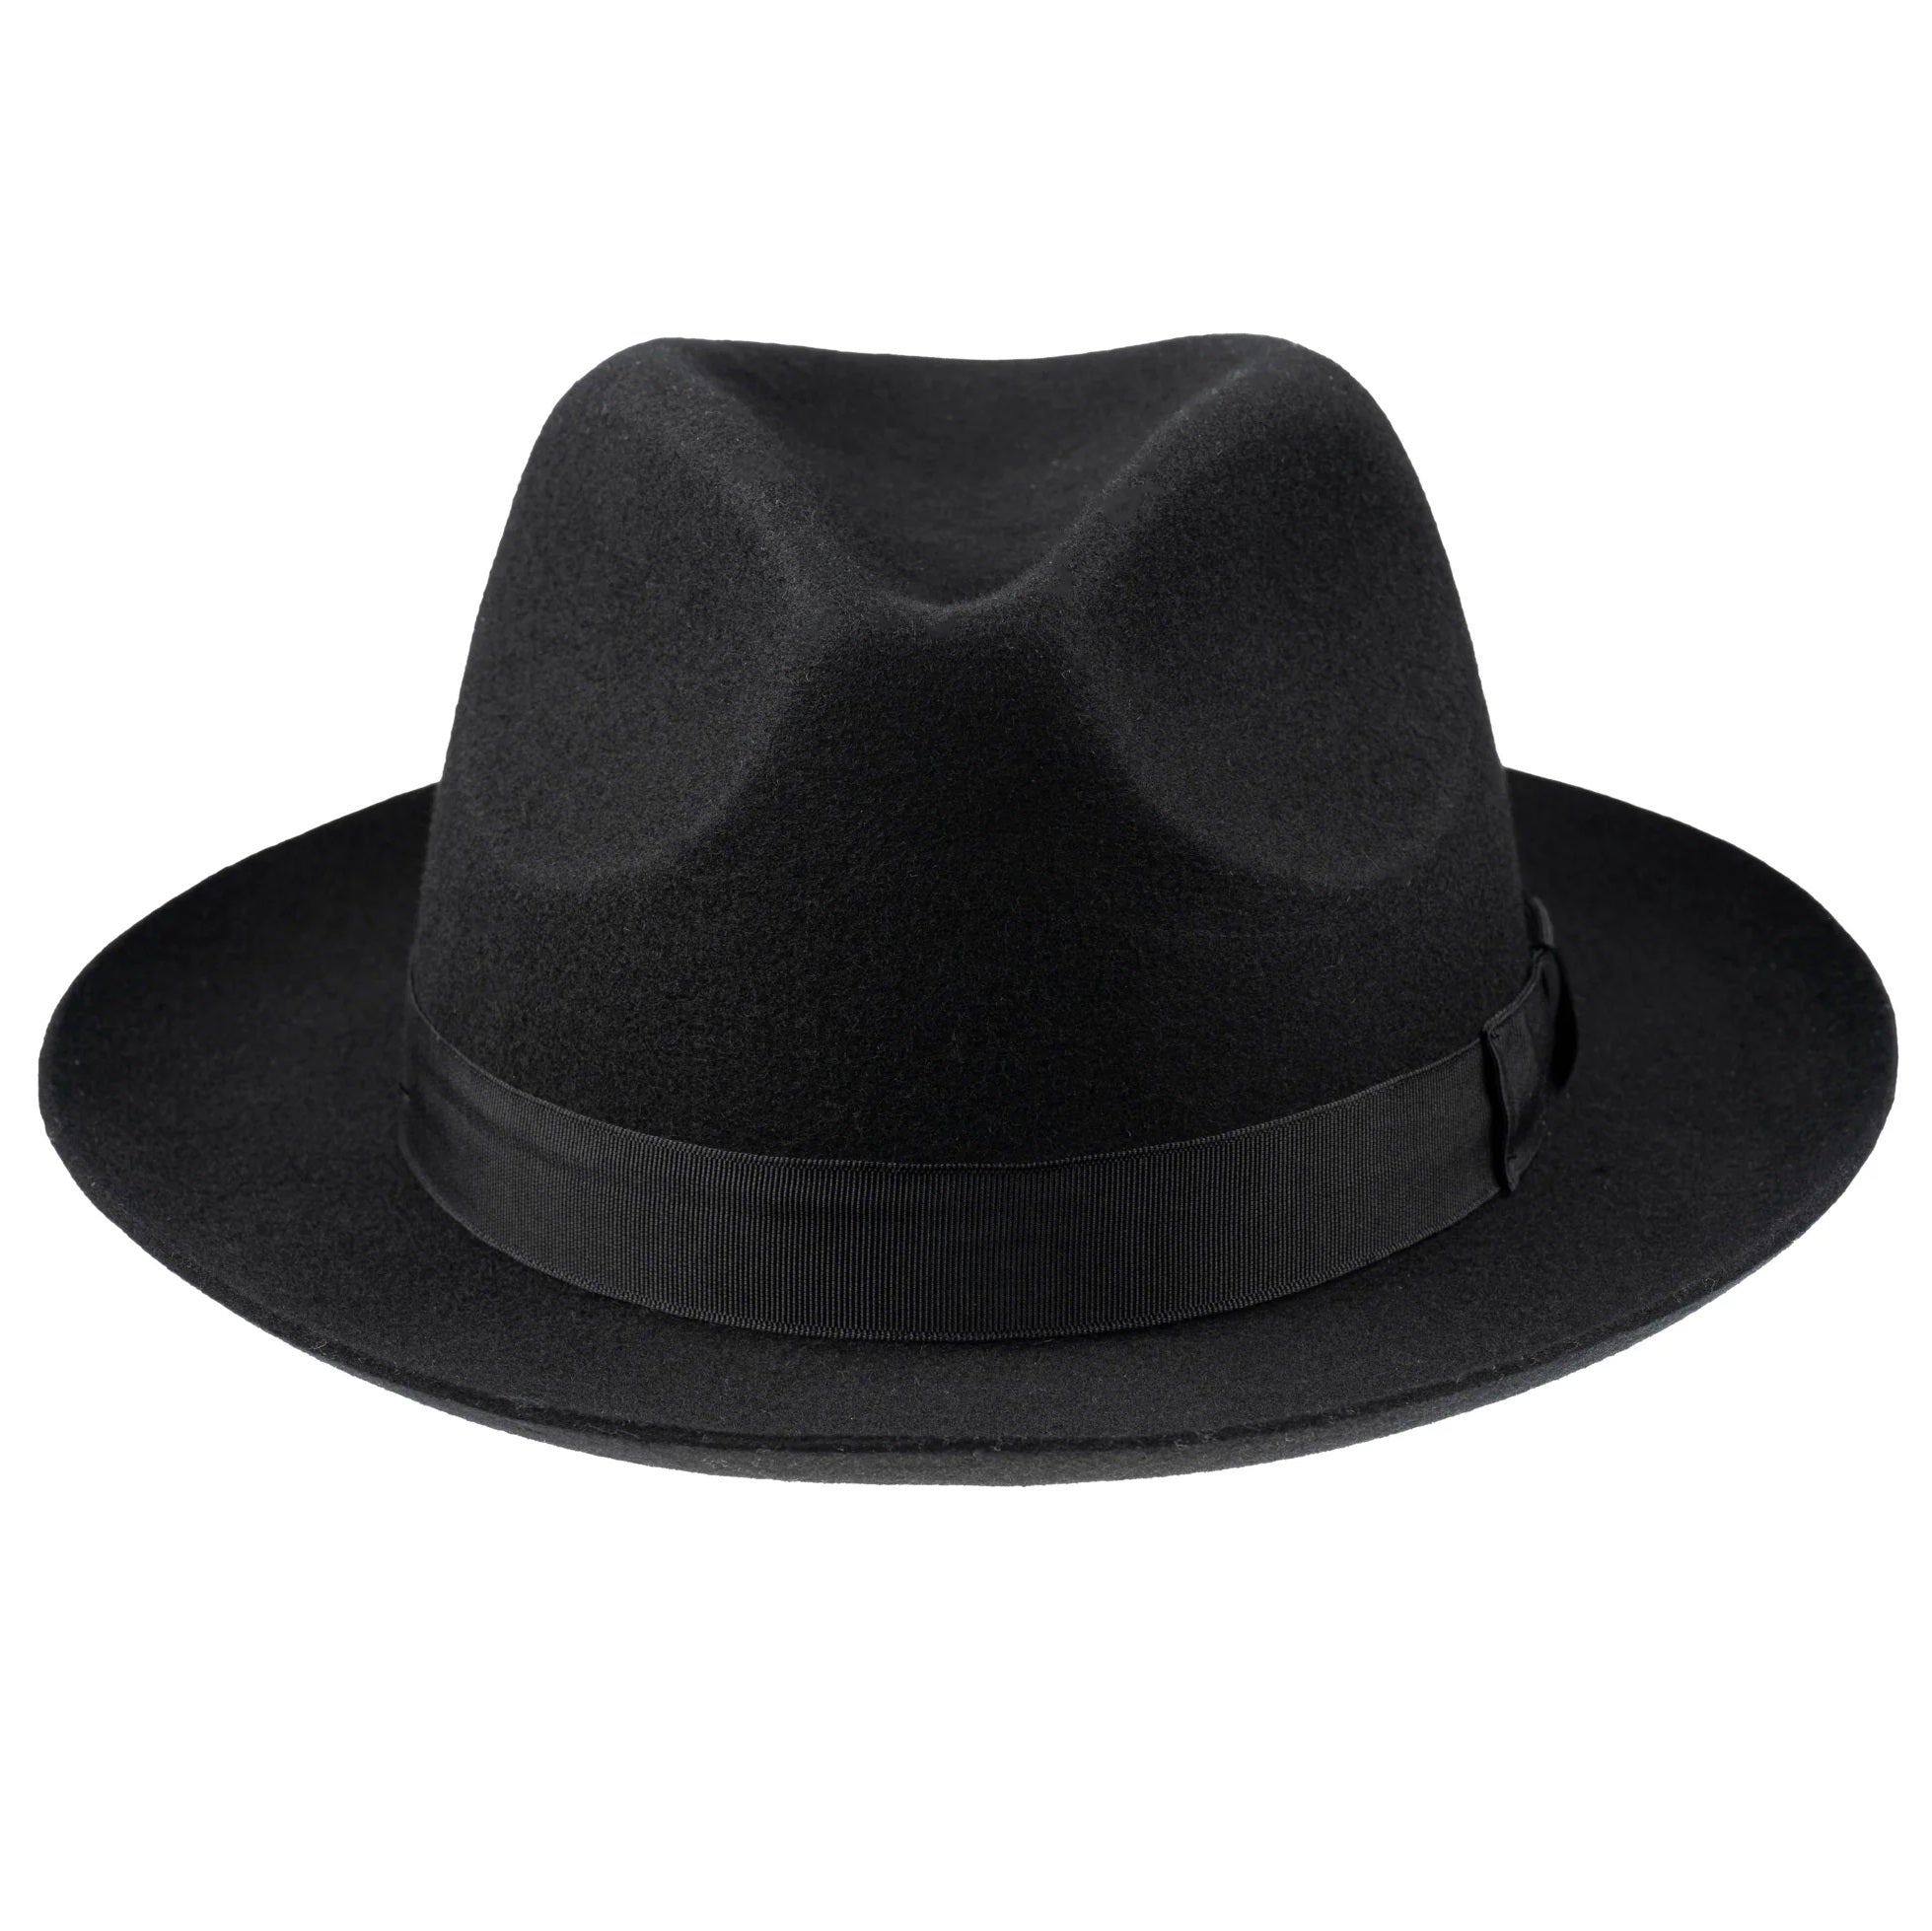 CHRISTYS' Chepstow Wool Felt Fedora Hat - Black